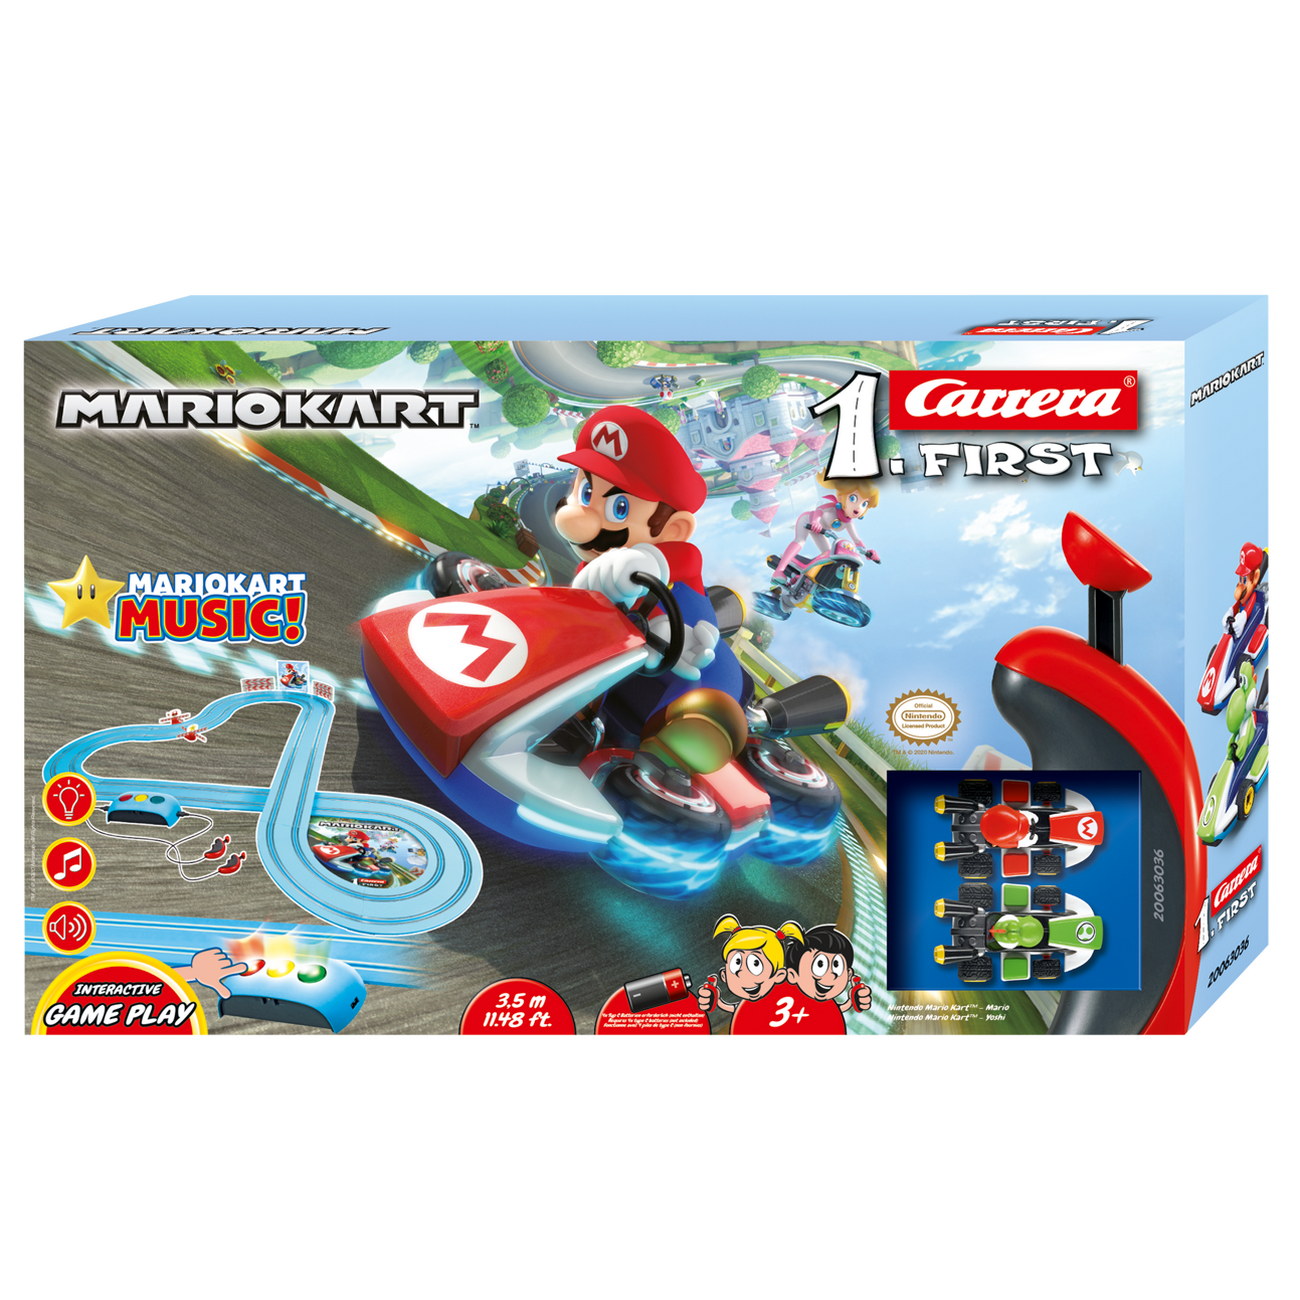 Carrera FIRST - Nintendo Mario Kart - Royal Raceway (20063036)